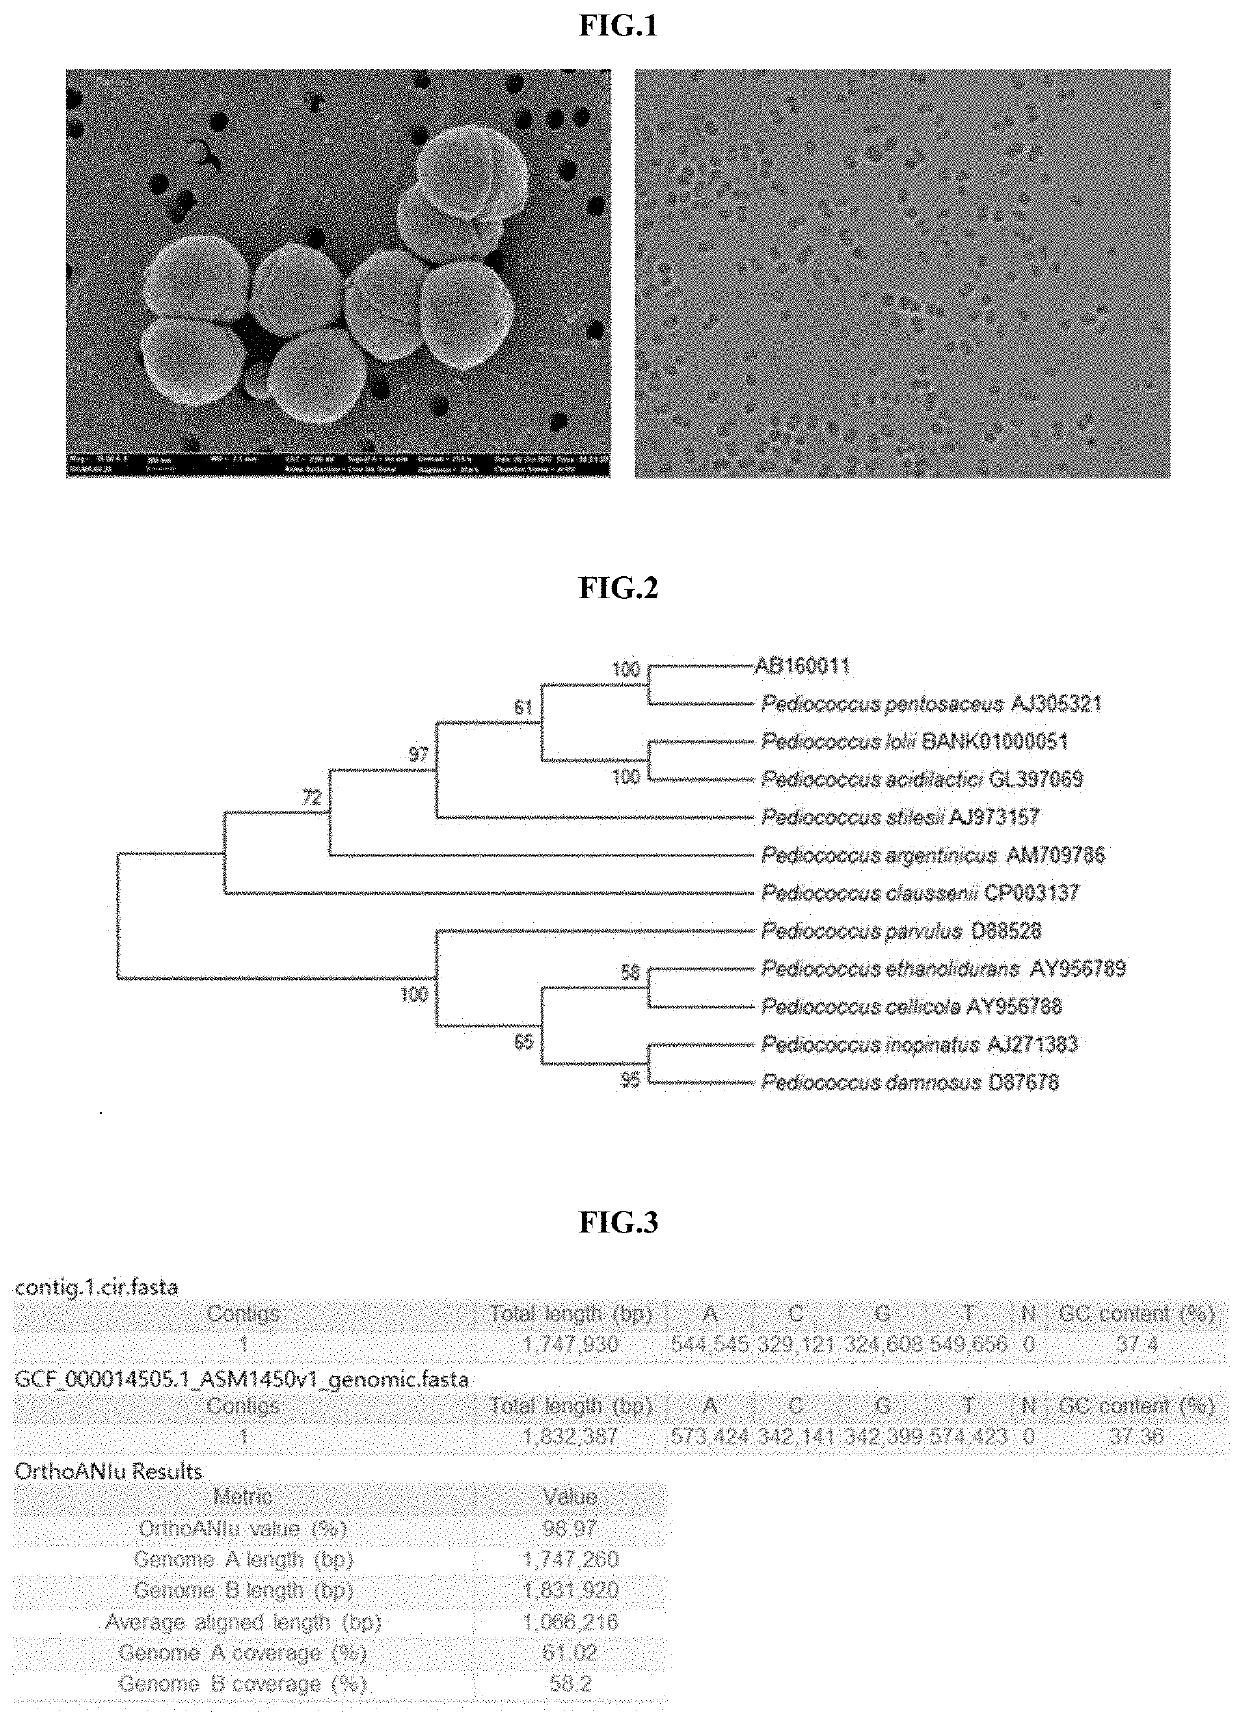 Novel pediococcus pentosaceus ab 160011 strain and composition containing same